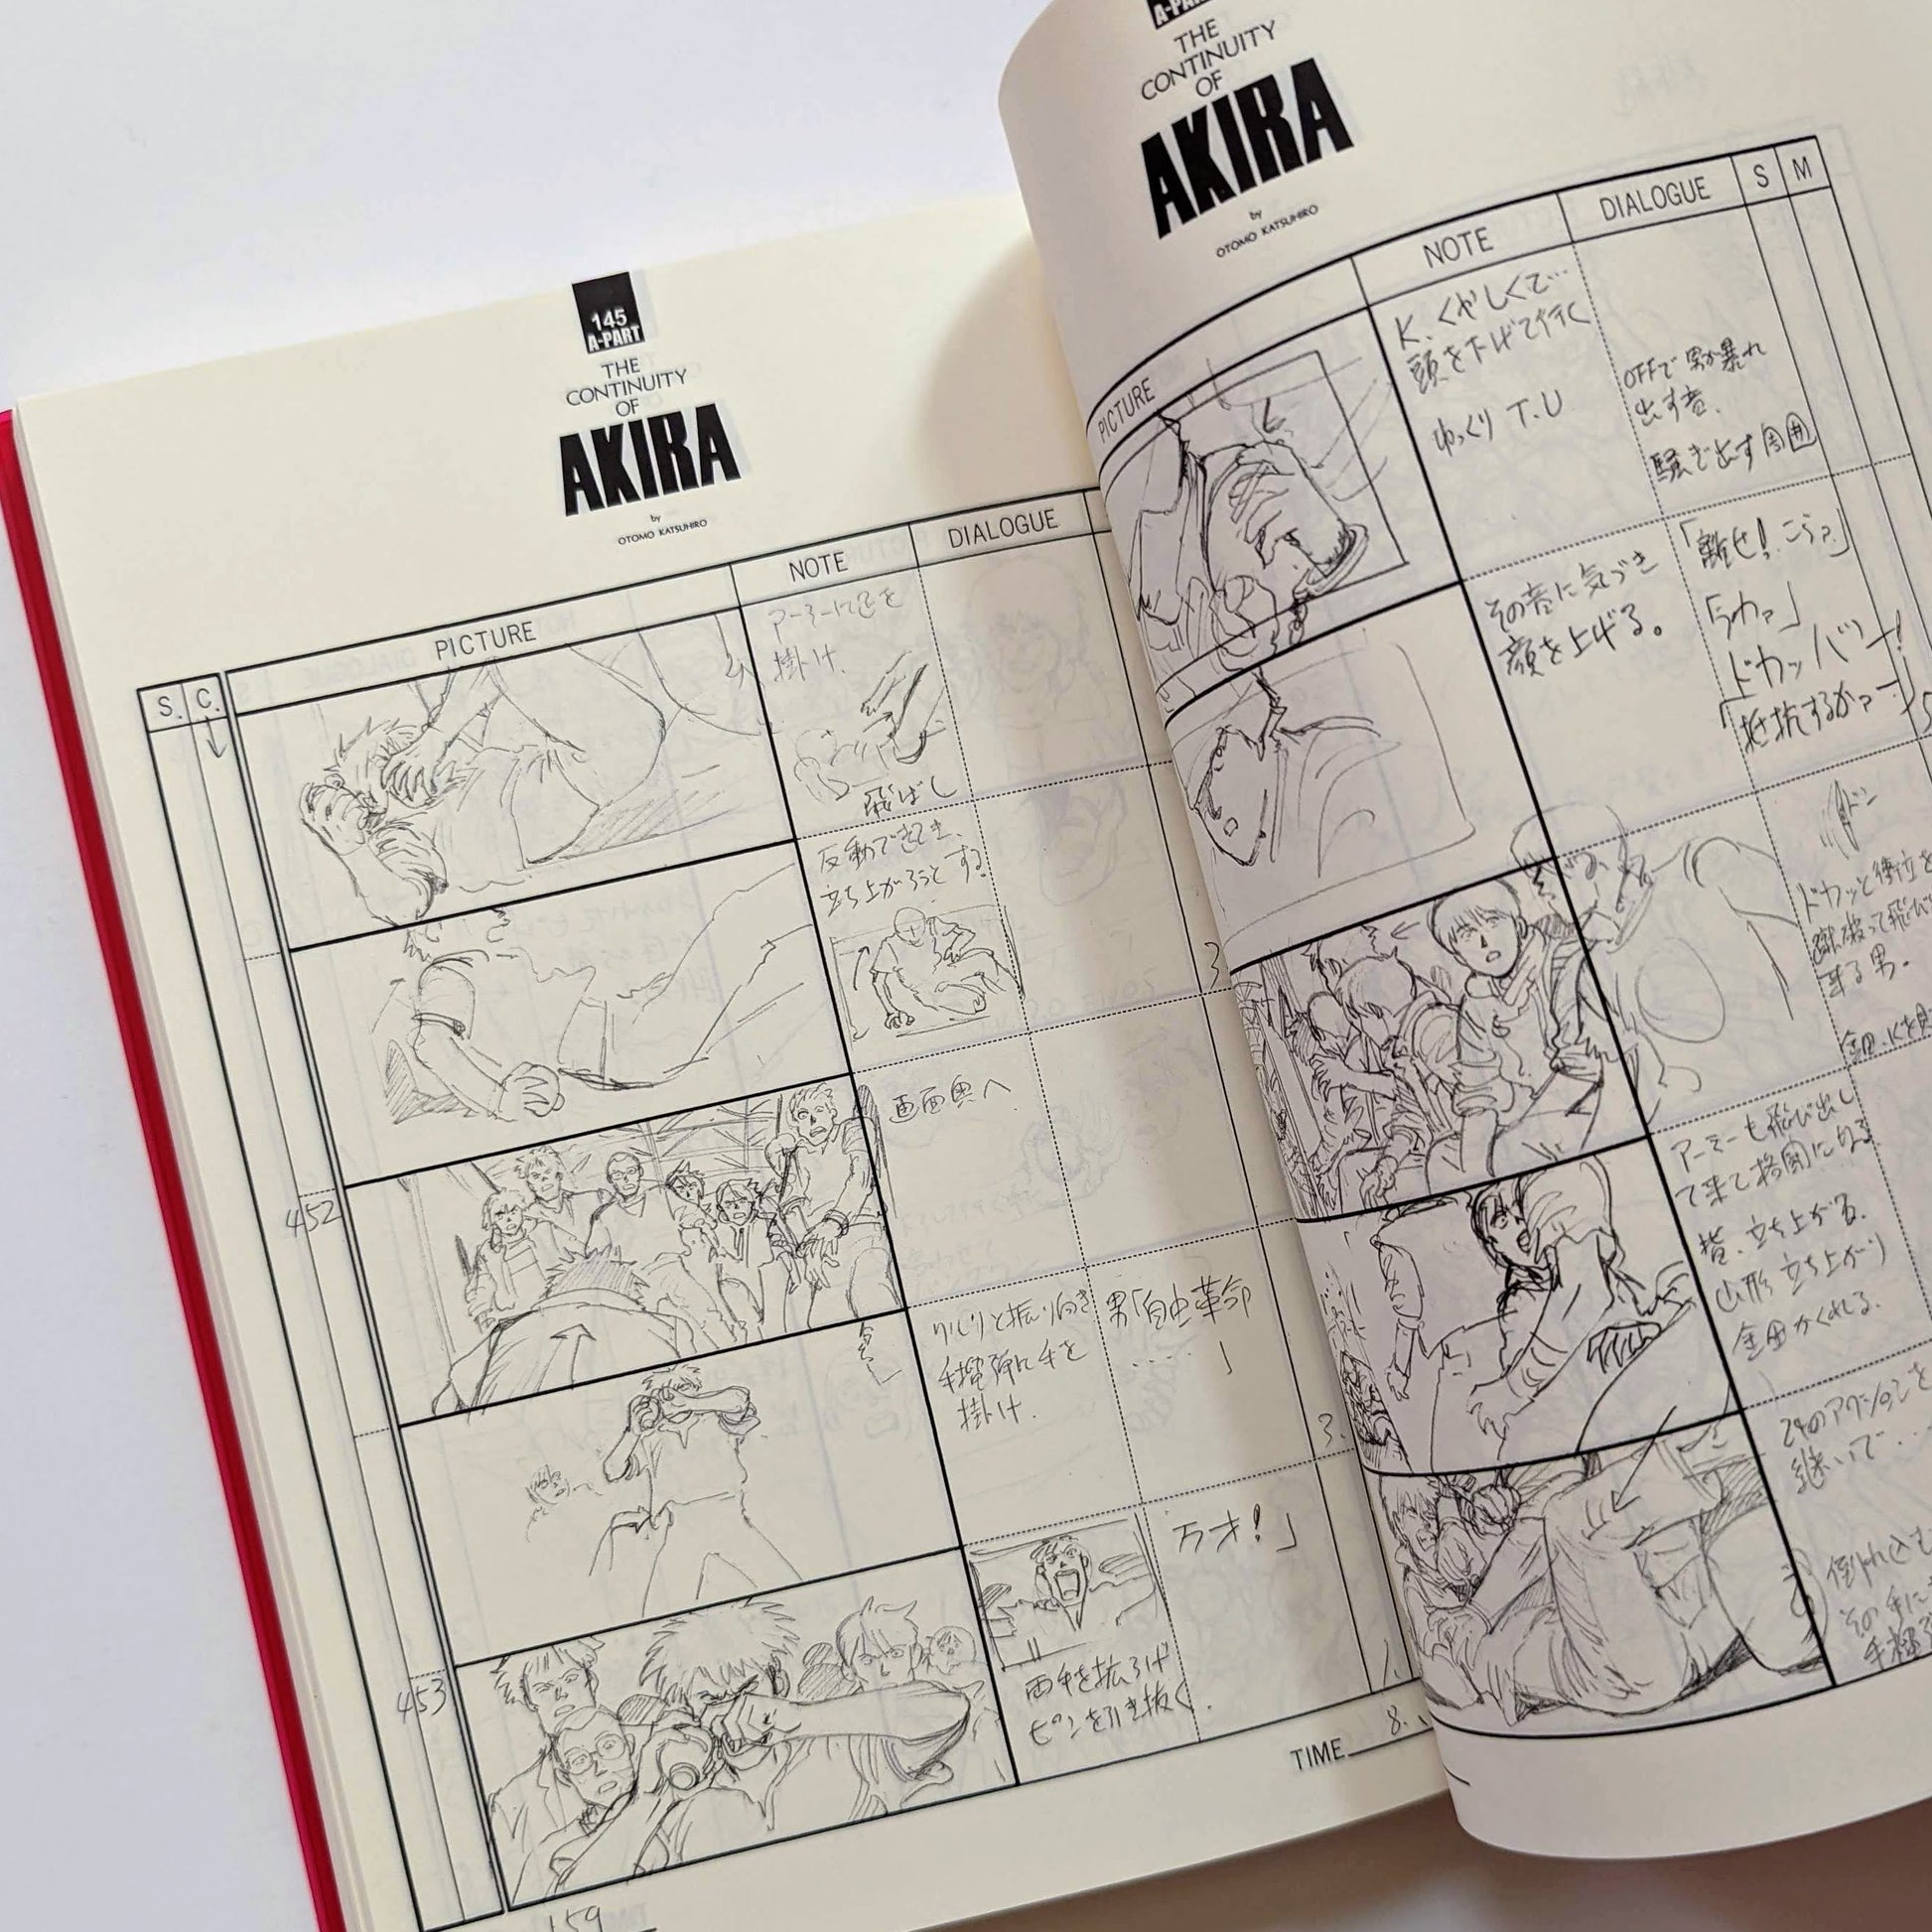 Otomo Complete Works No. 21: Akira Storyboards No. 1